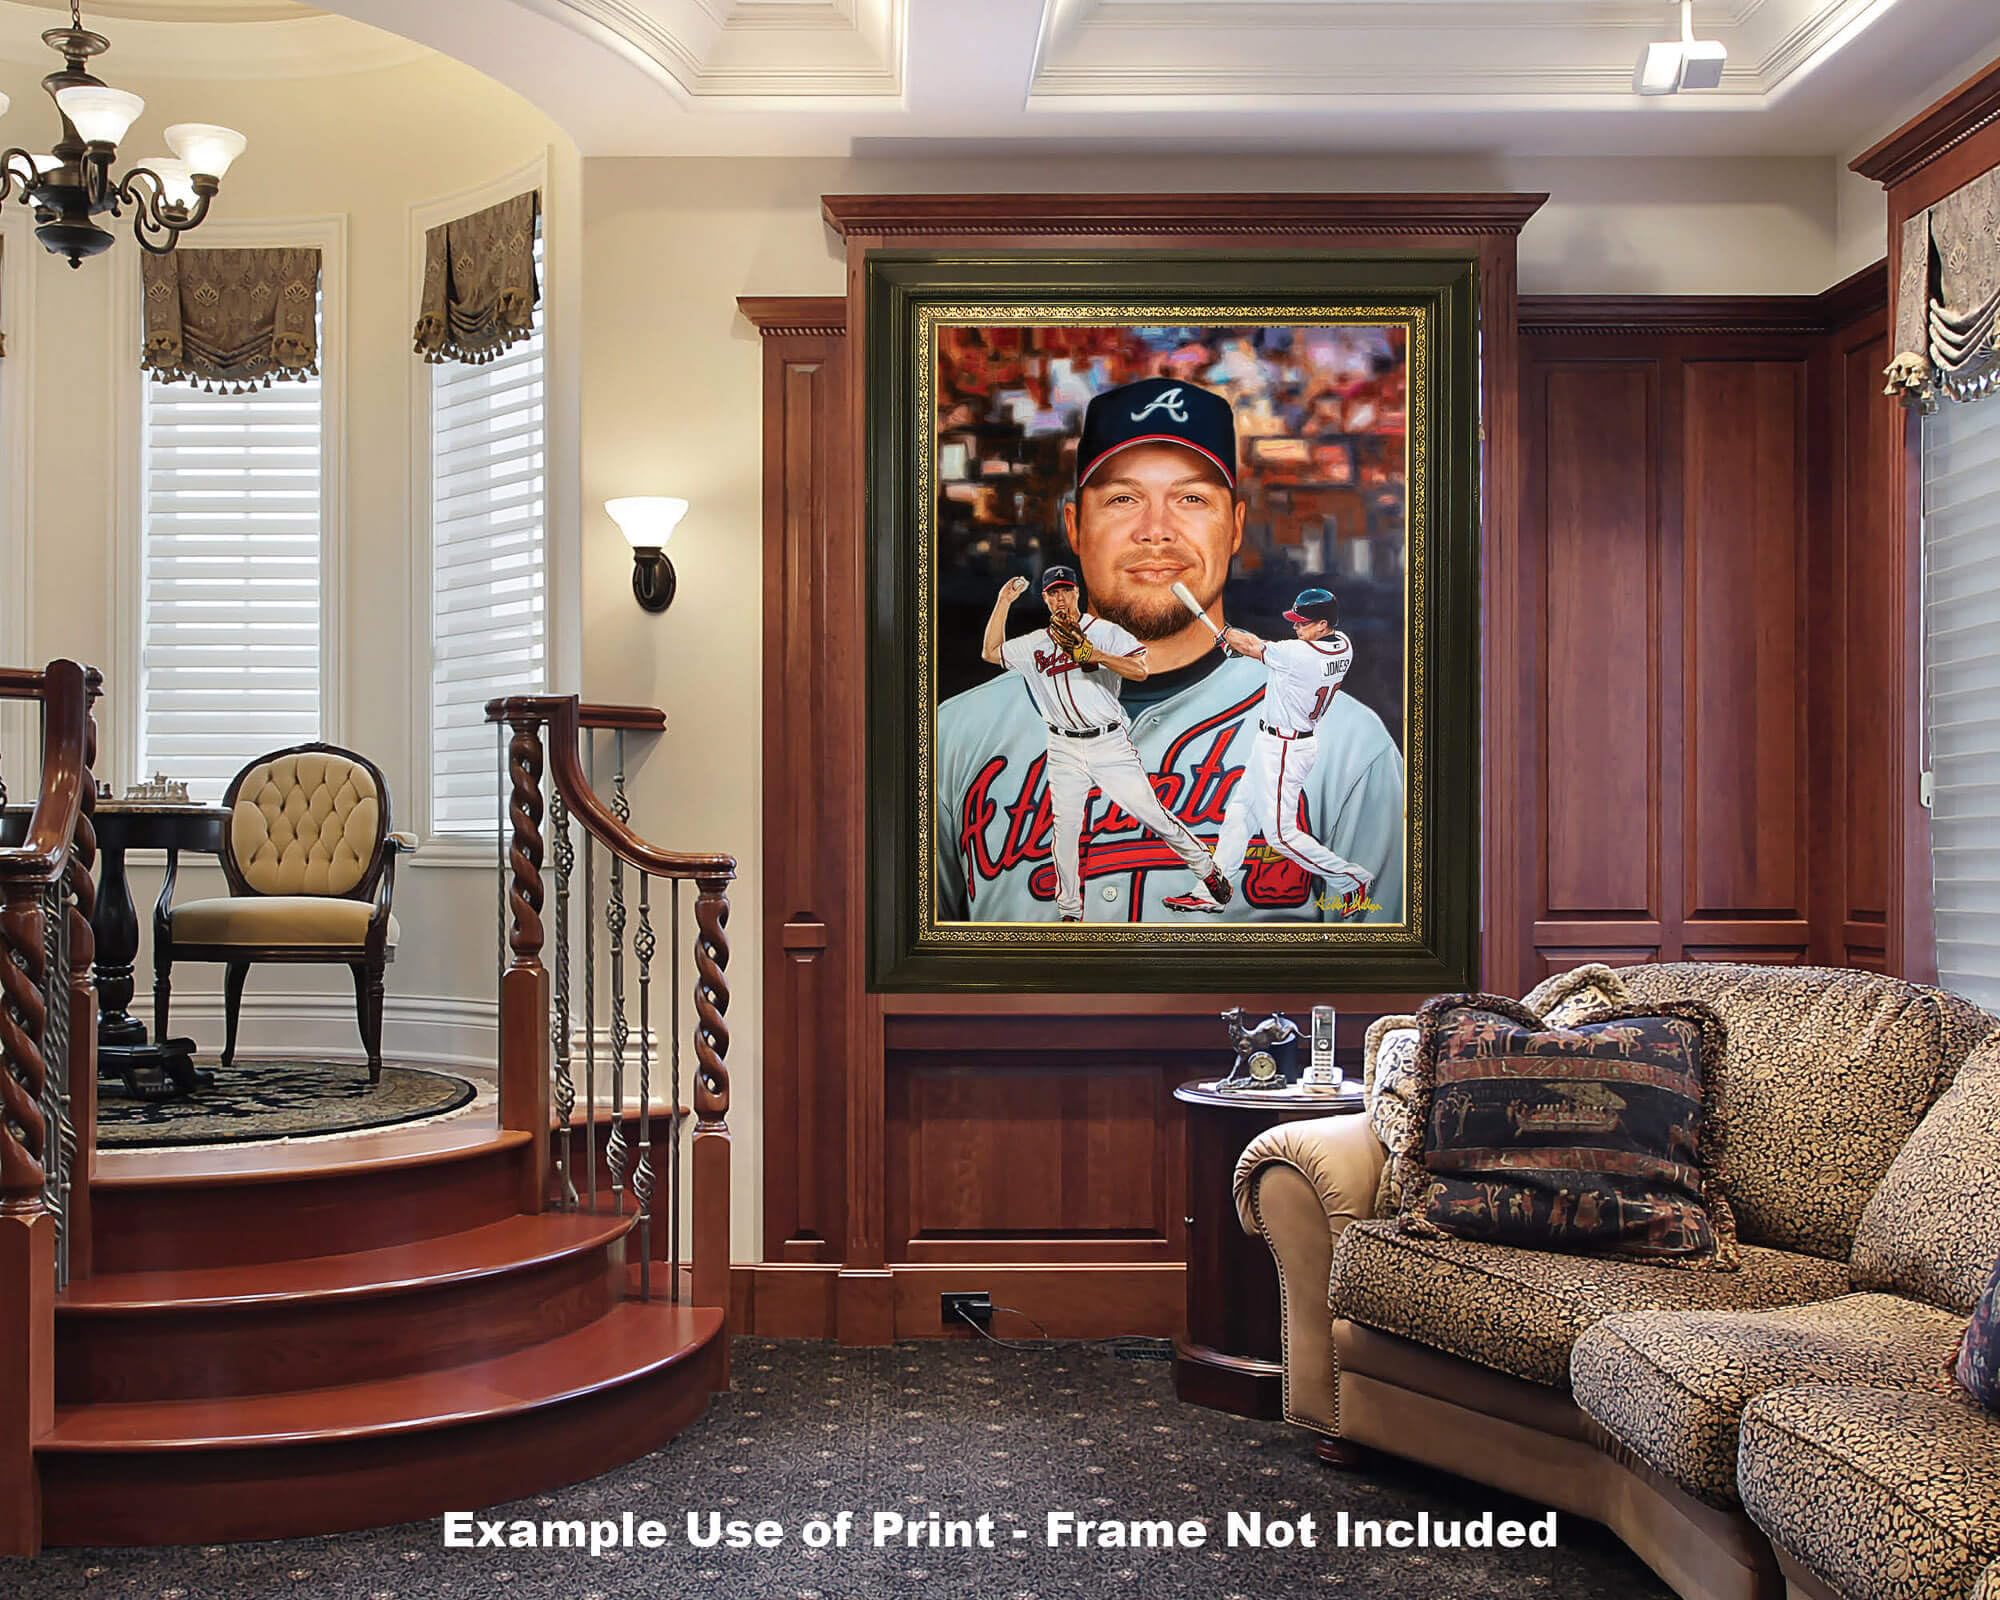 Atlanta Braves 3rd Base Chipper Jones MLB Baseball Player HOF Hall of Fame Art Print 1AM3 on 40x50 polyester canvas